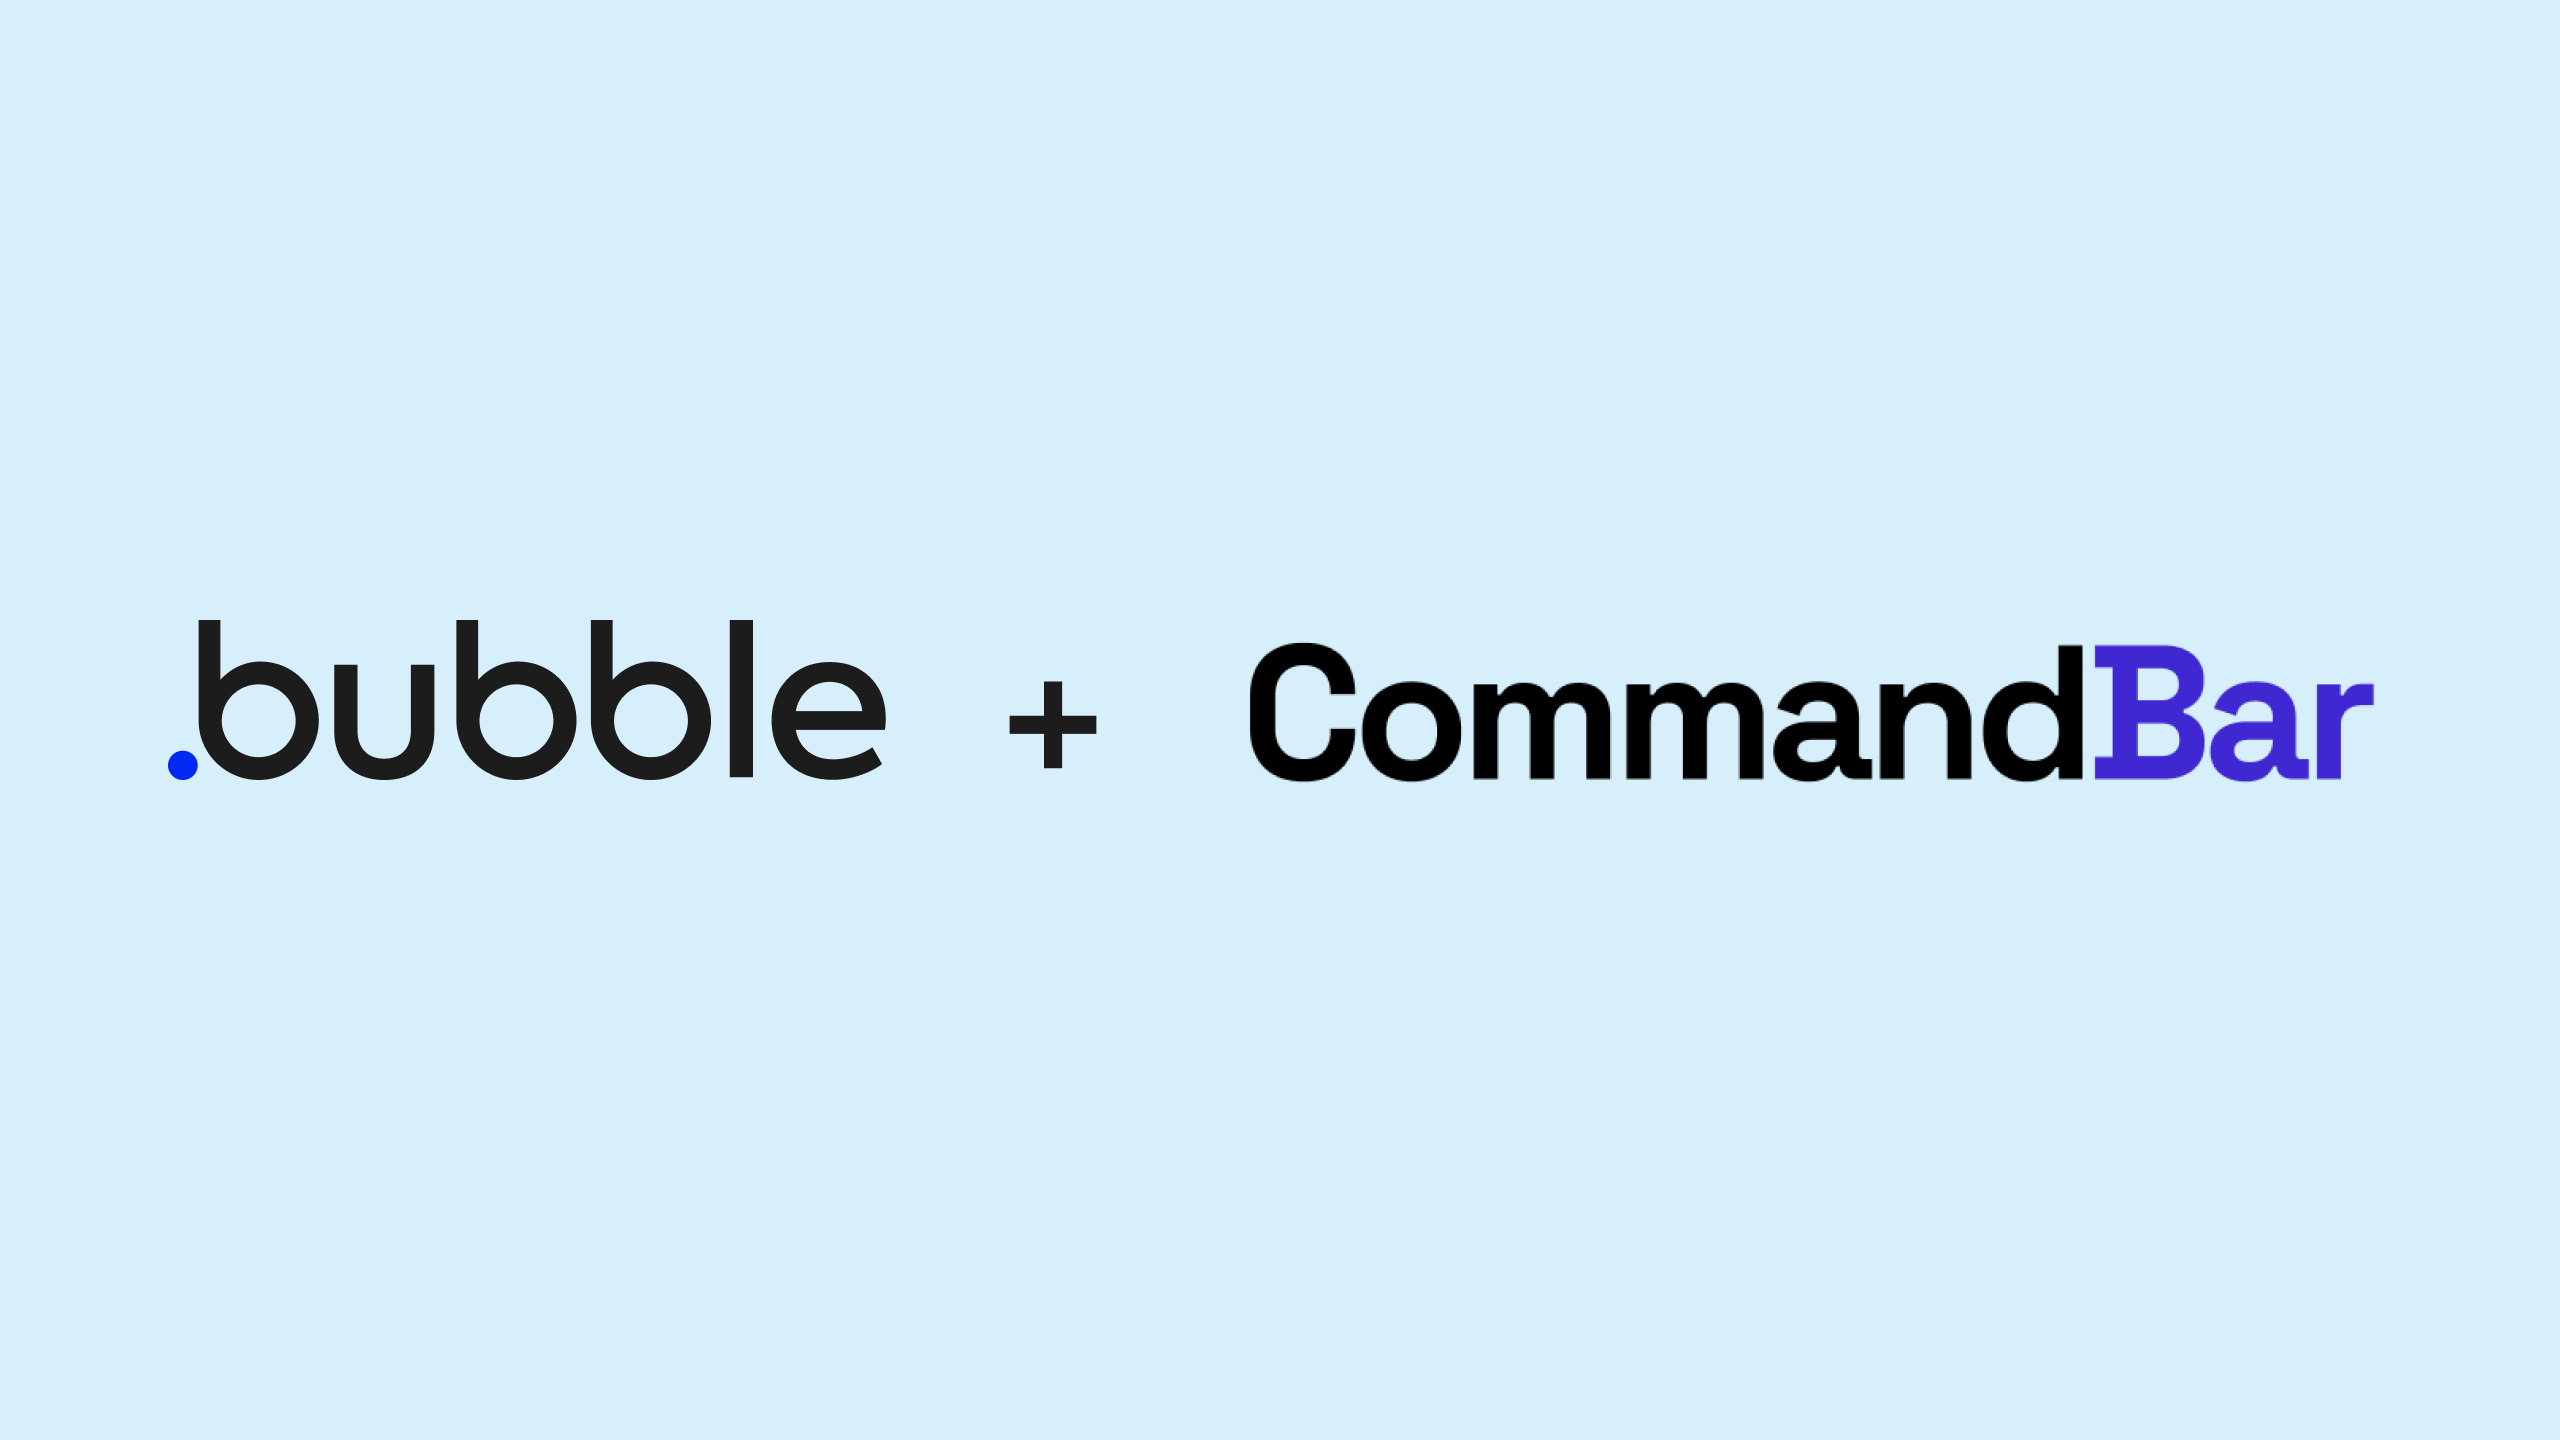 CommandBar plugin for Bubble gives you mouse-free UX shortcuts